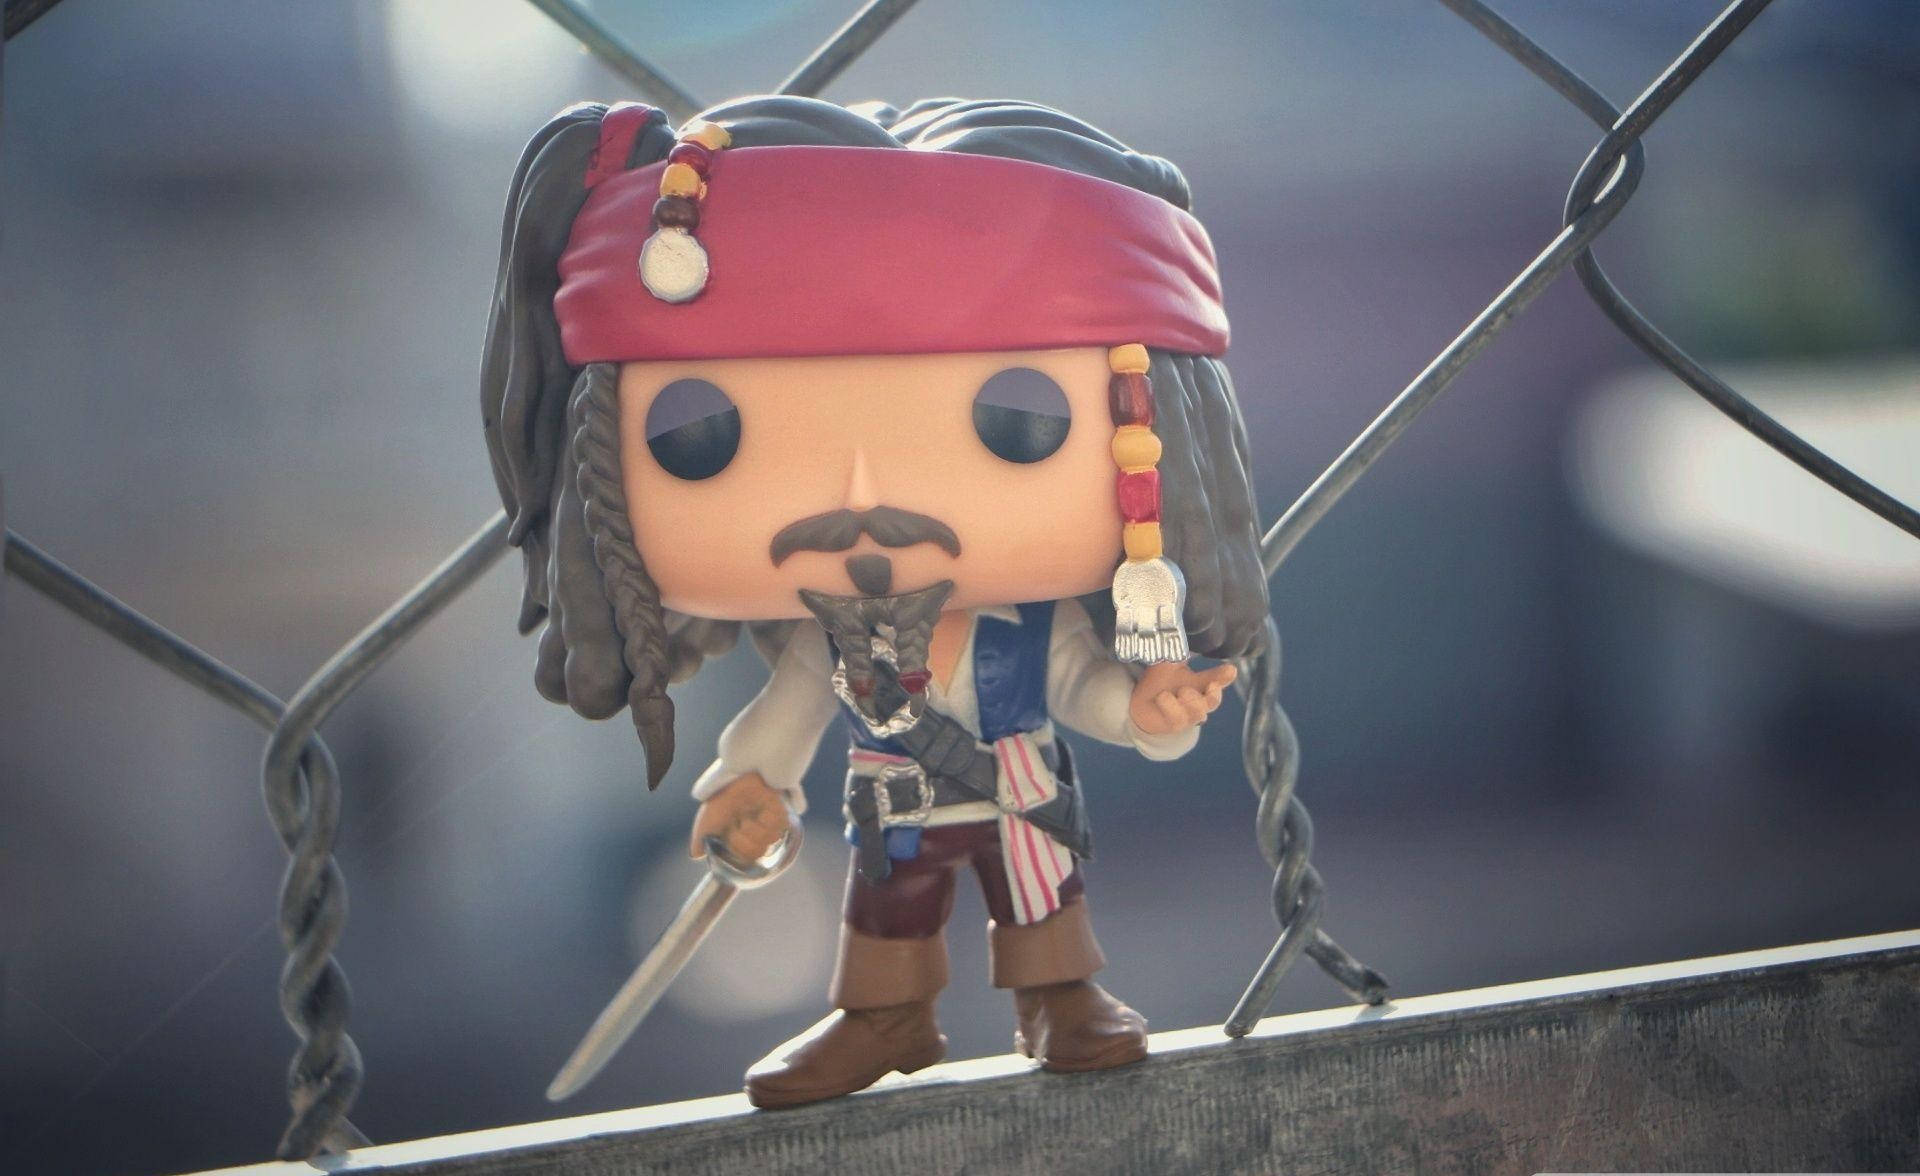 Funko Pop Jack Sparrow